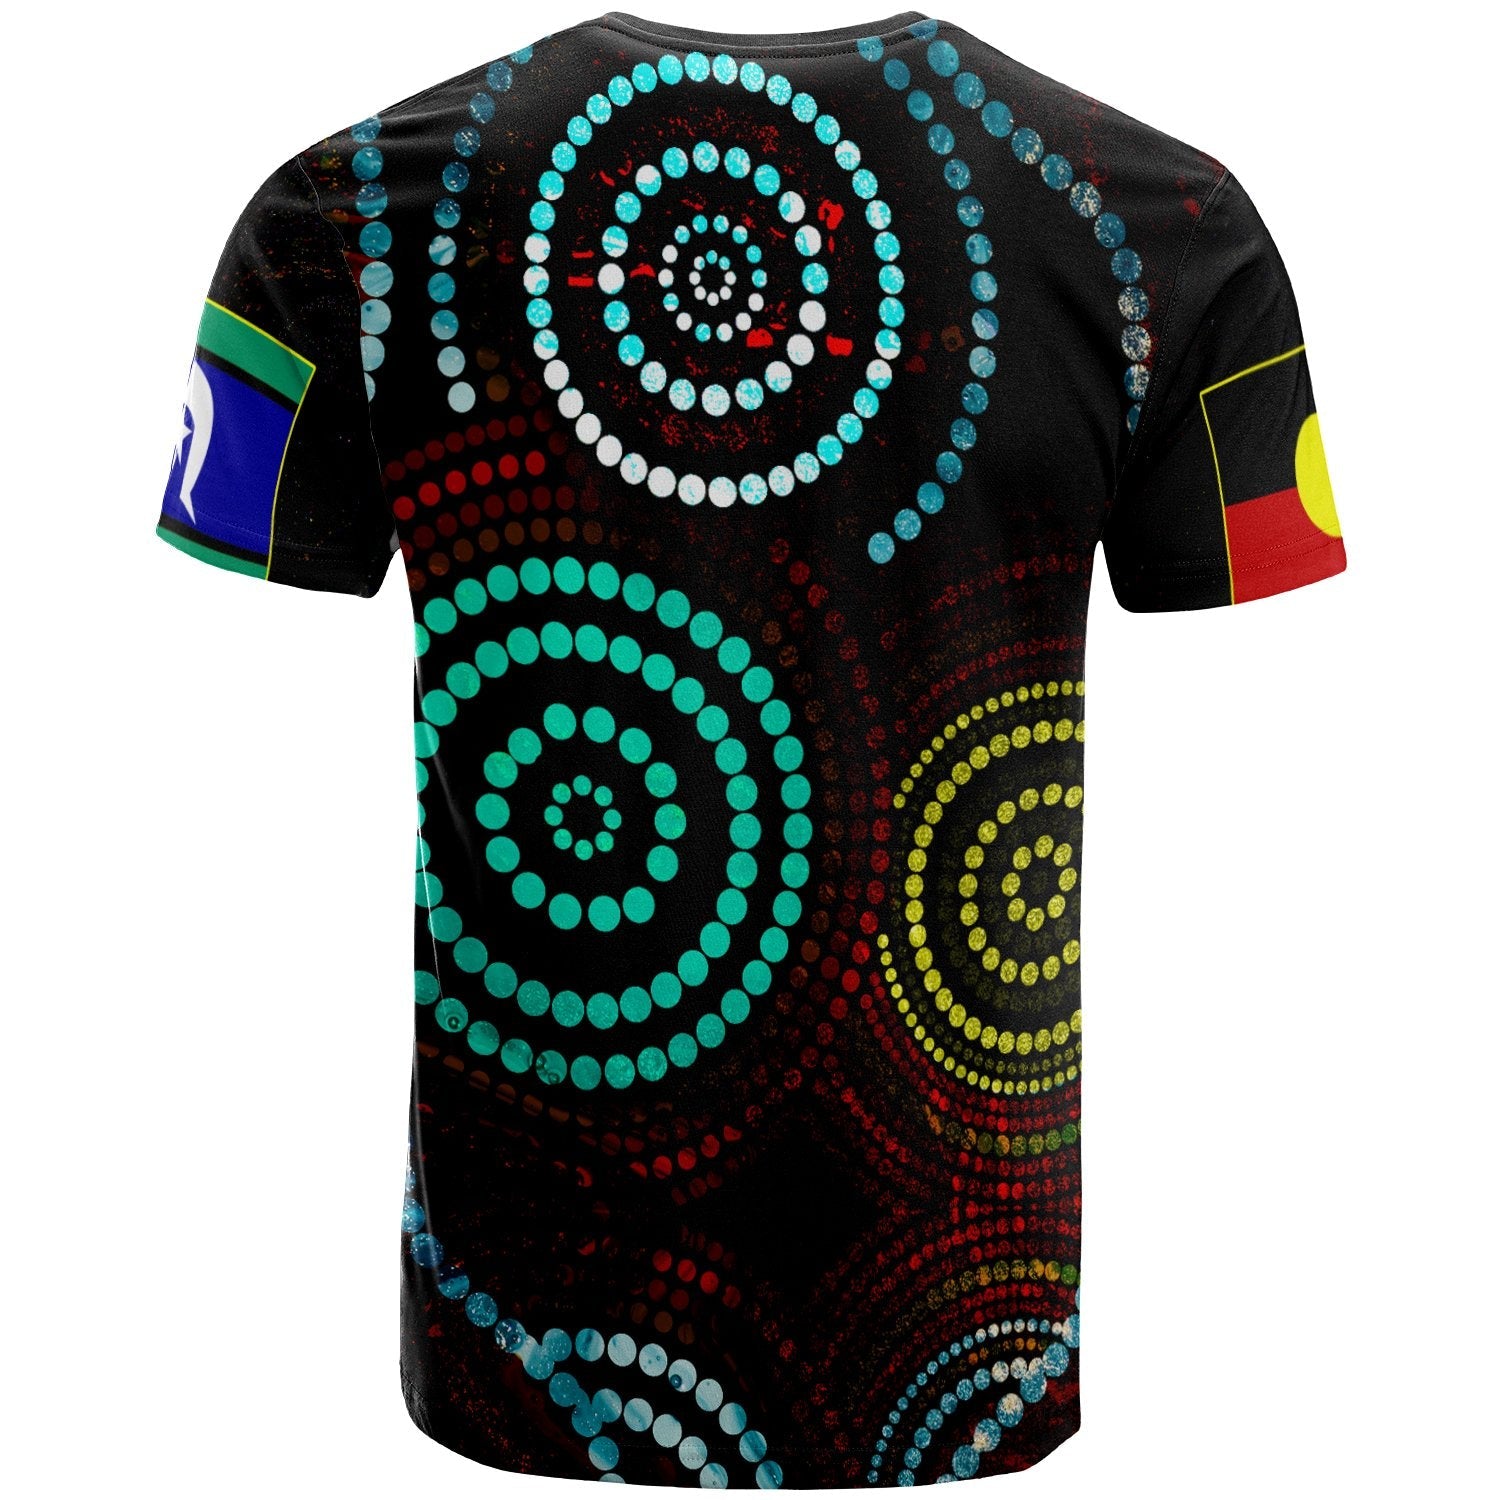 aboriginal-t-shirt-aboriginal-dot-patterns-flag